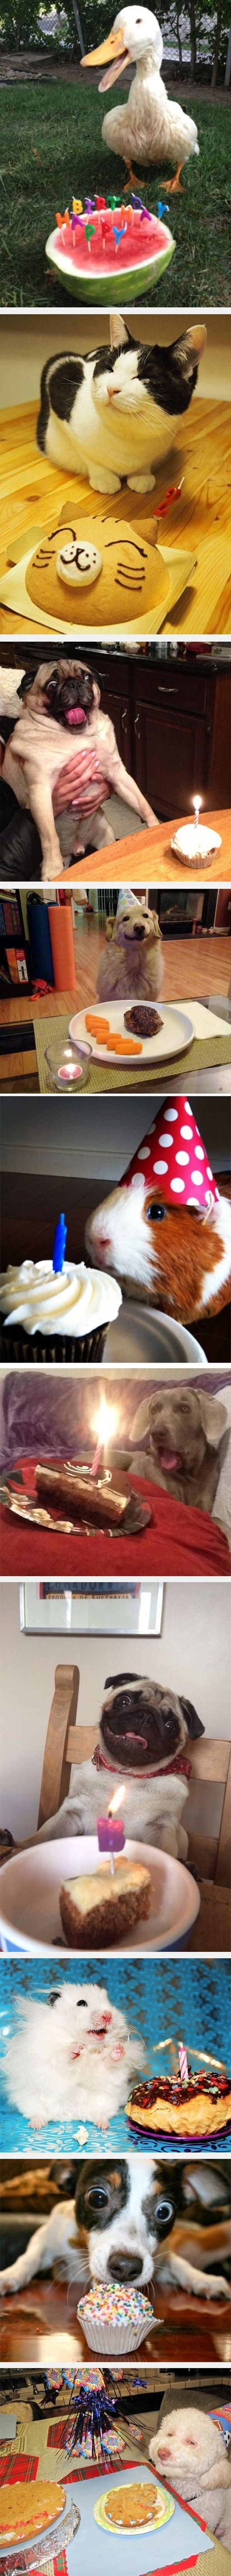 happy birthday animals funny picture